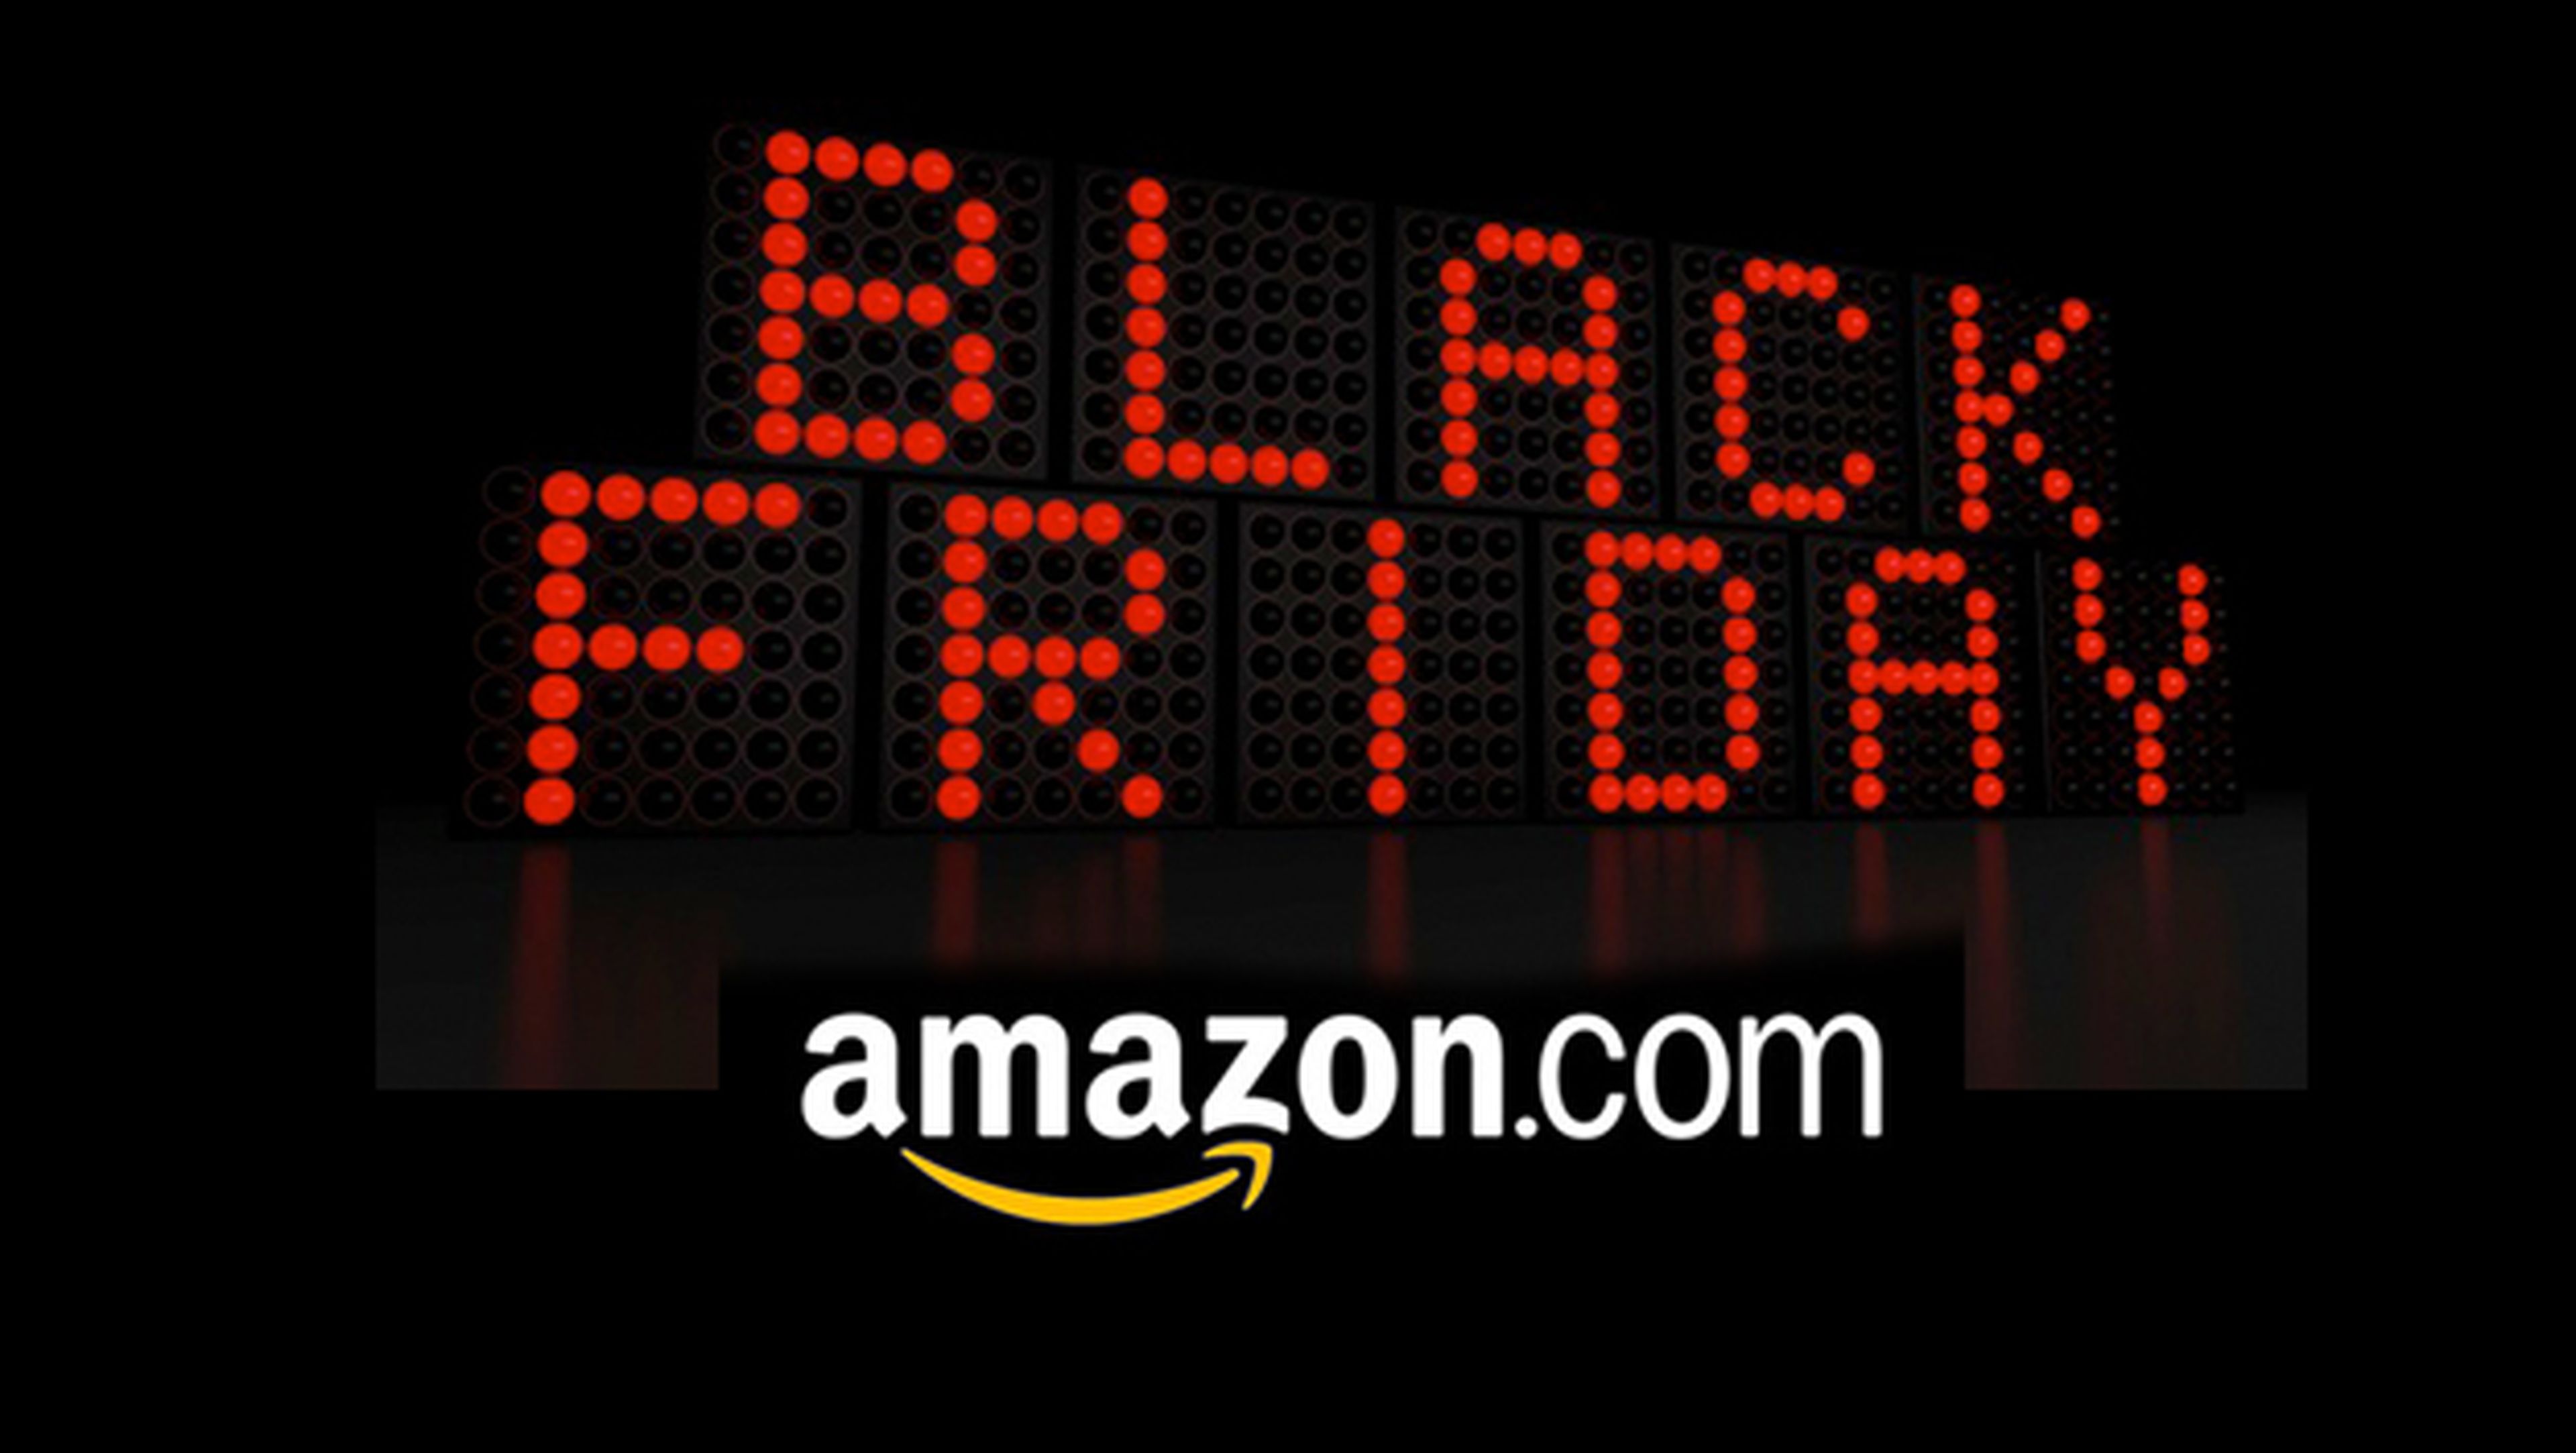 Black Friday Amazon 2014